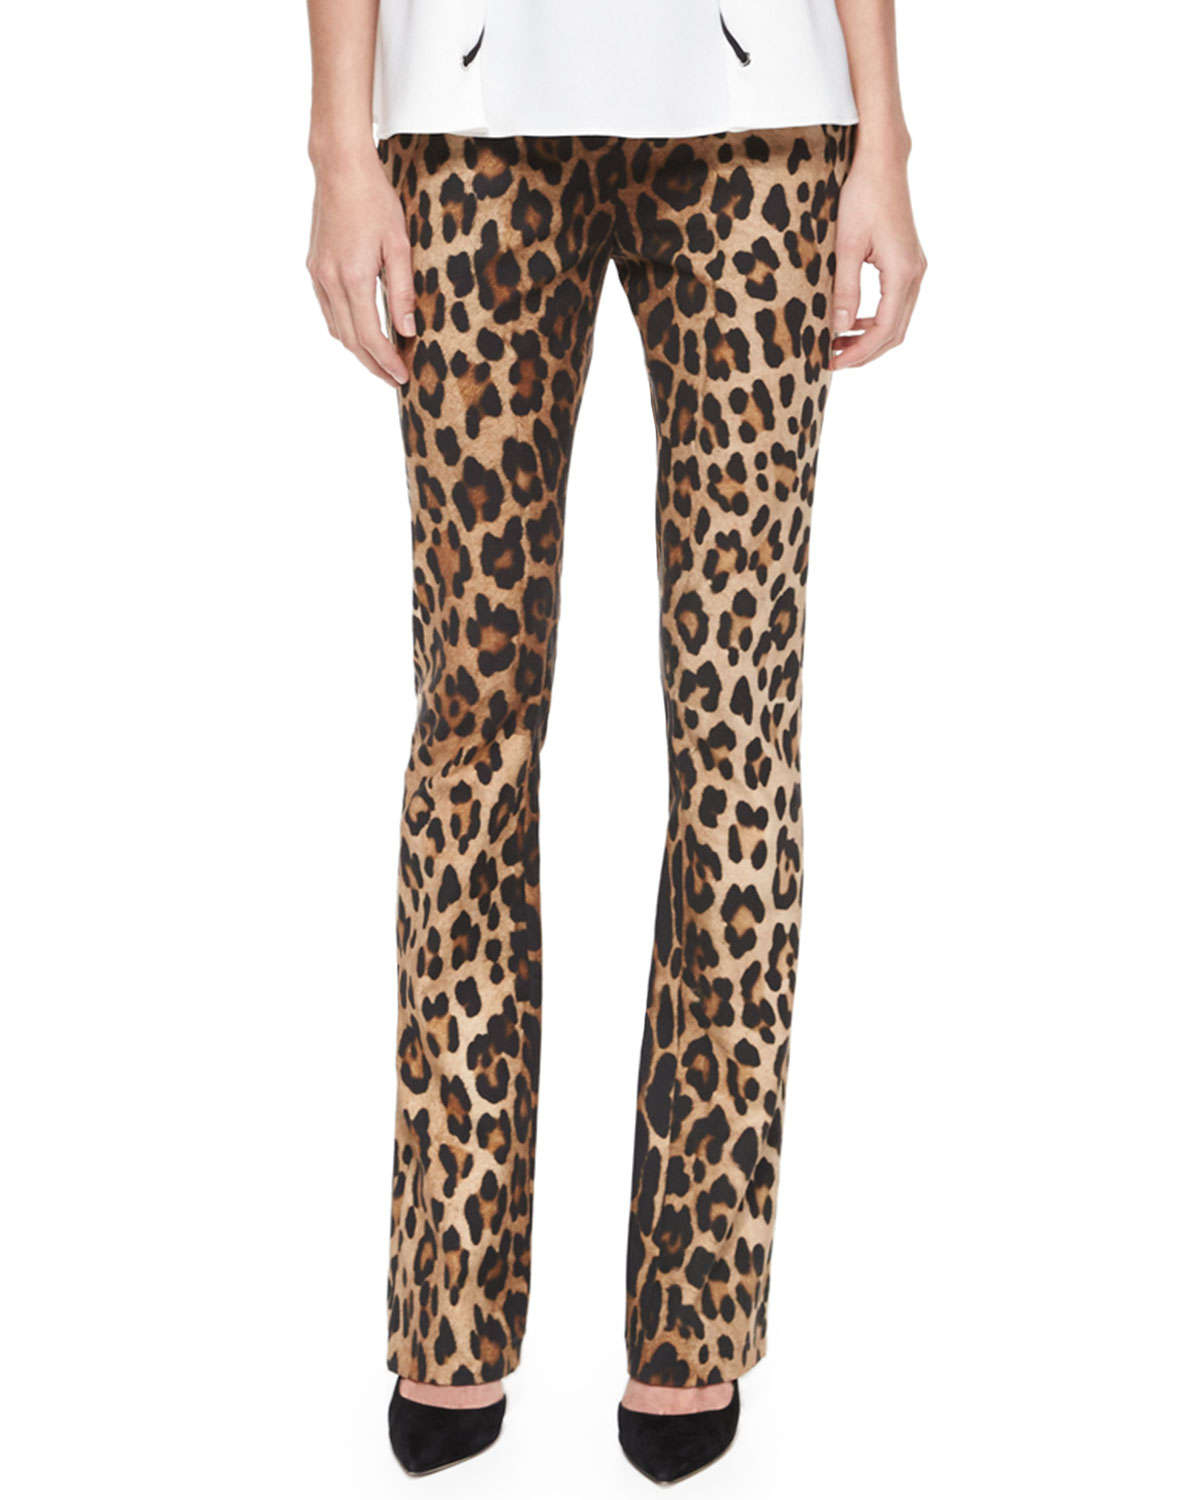 Lyst - Altuzarra Leopard-Print Flared Pants